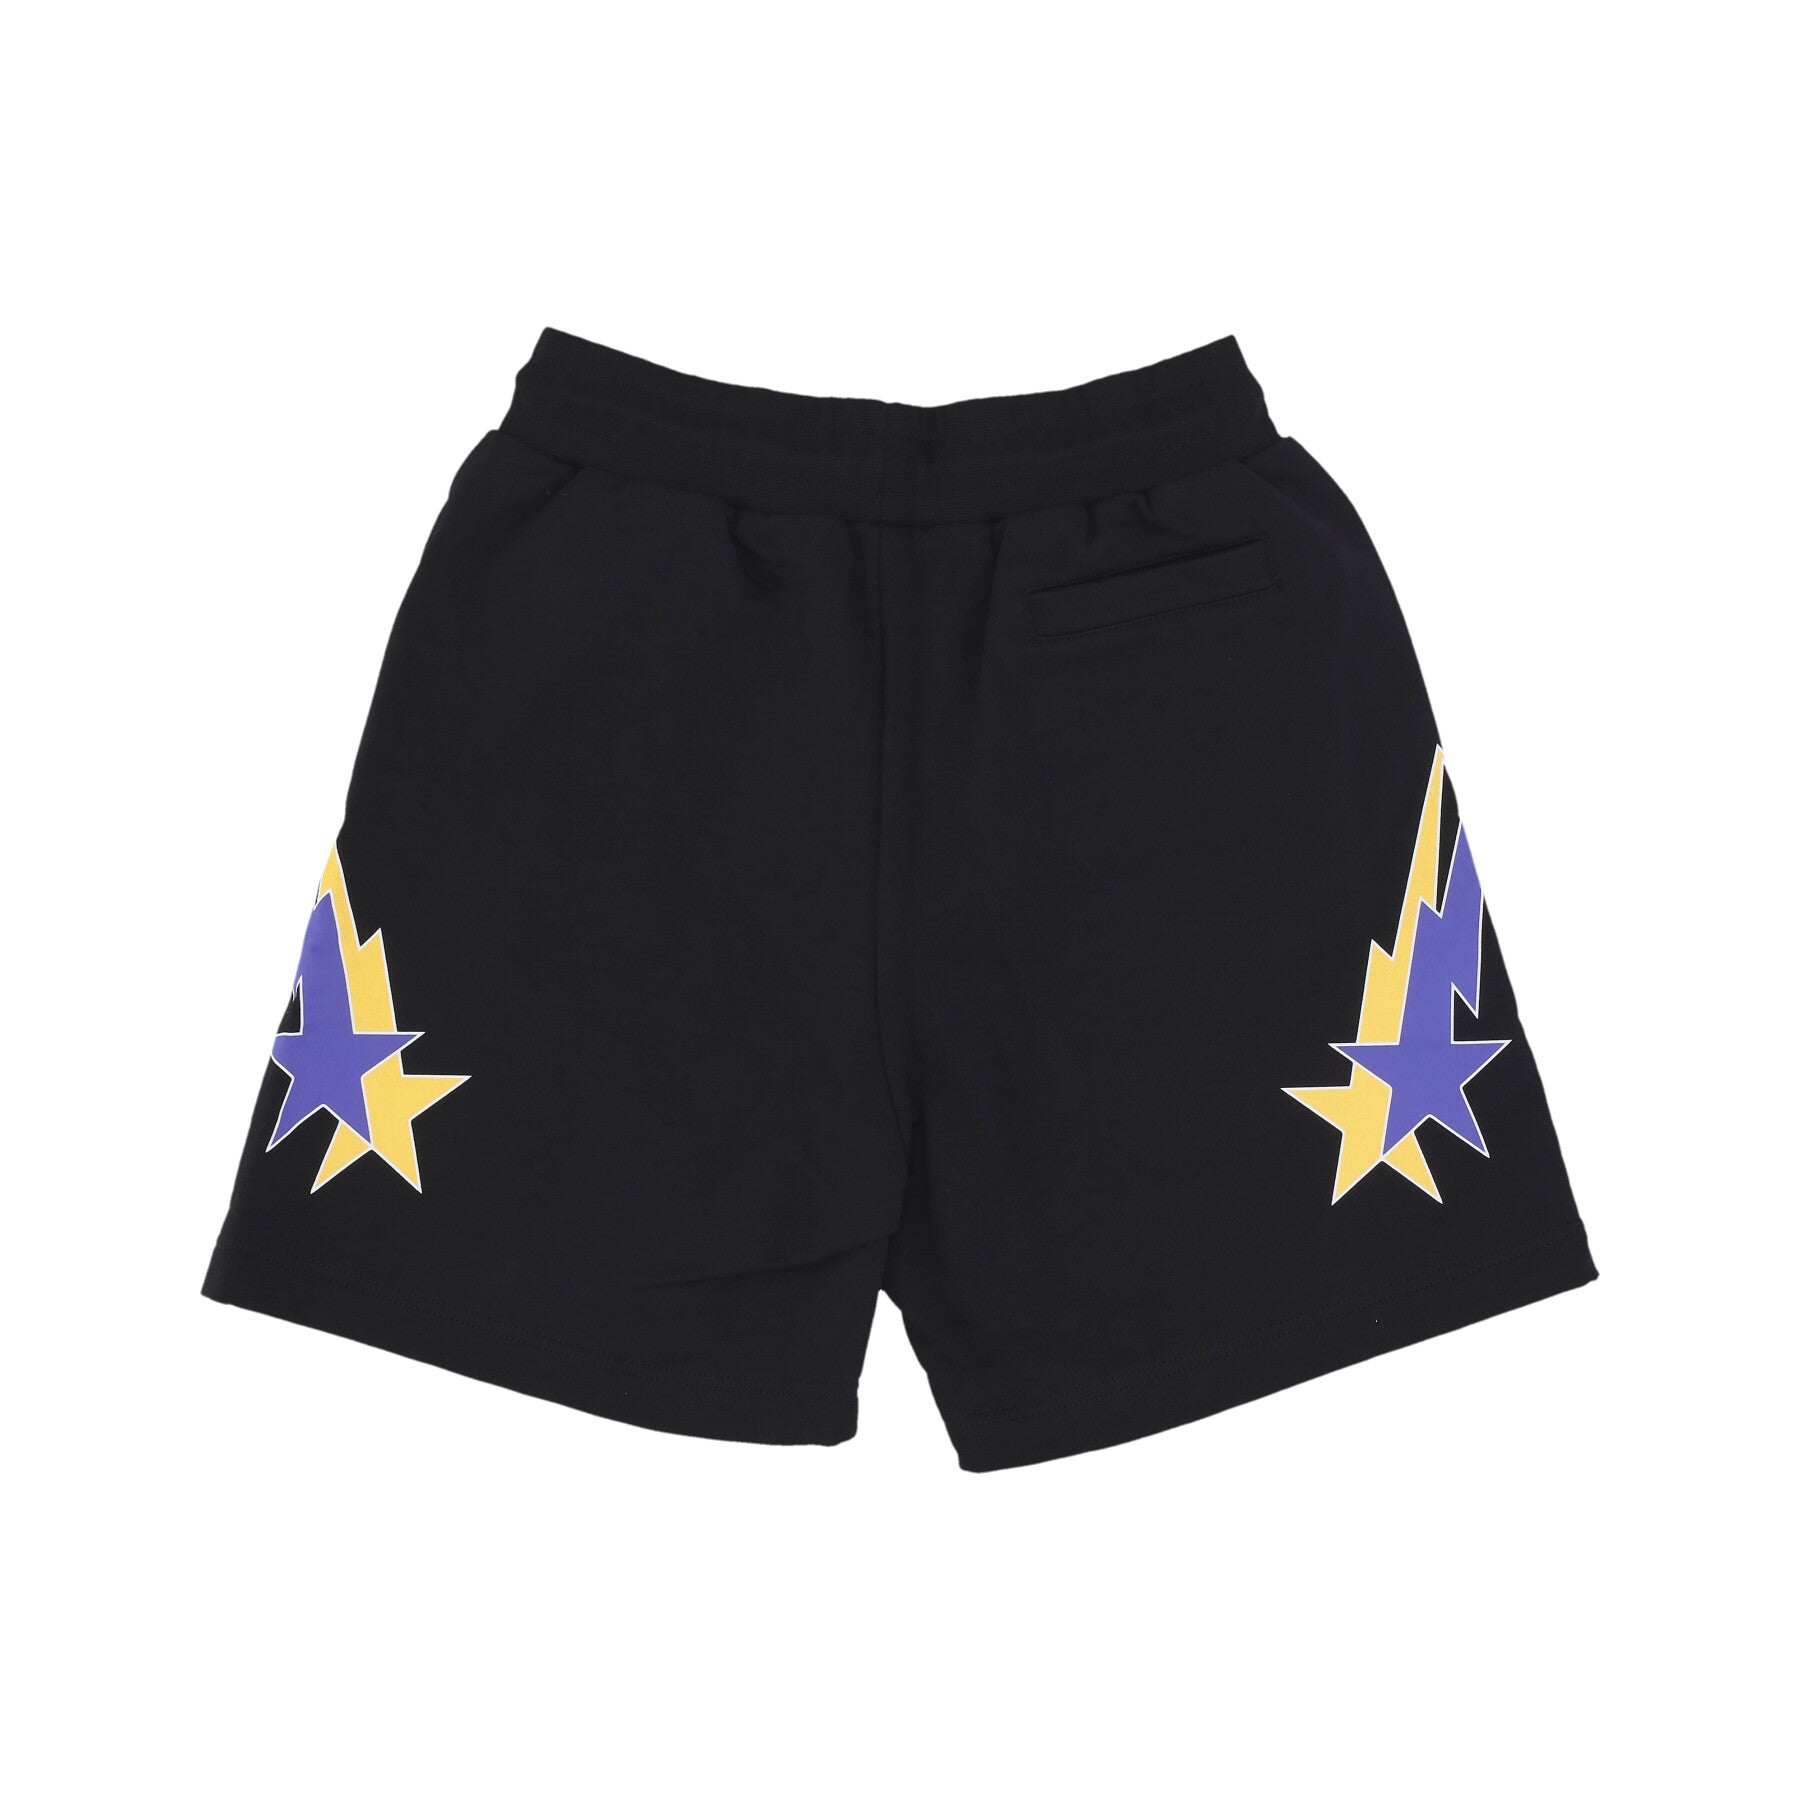 Pantalone Corto Tuta Uomo Starry Lightning Shorts Black/yellow/purple PH00624